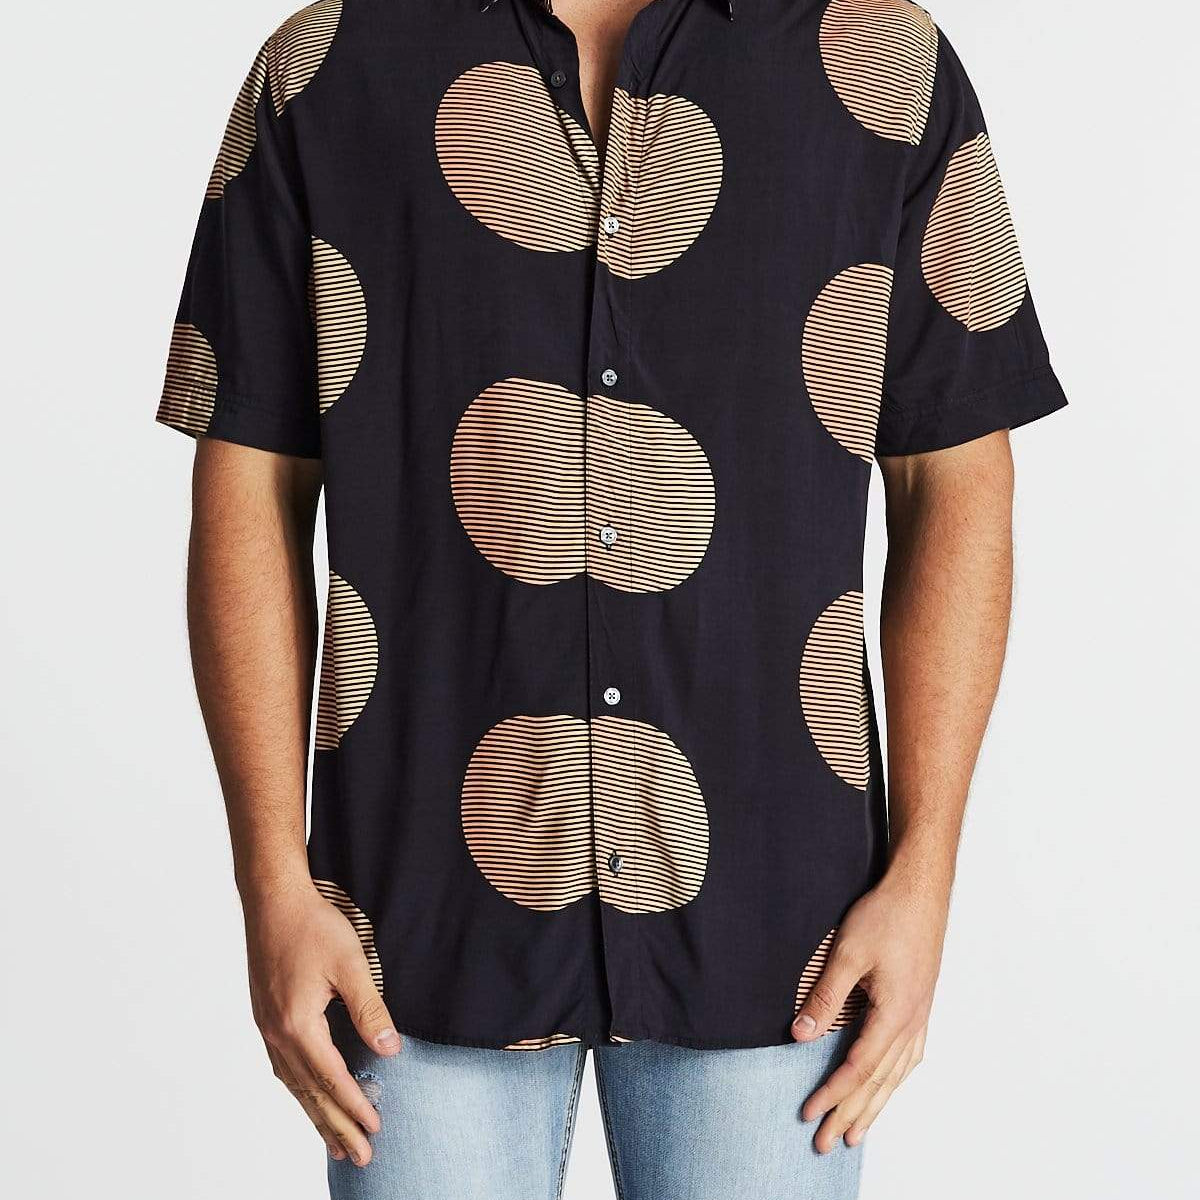 Nonsense Relaxed Short Sleeve Shirt Multi Colour Print – Neverland Store